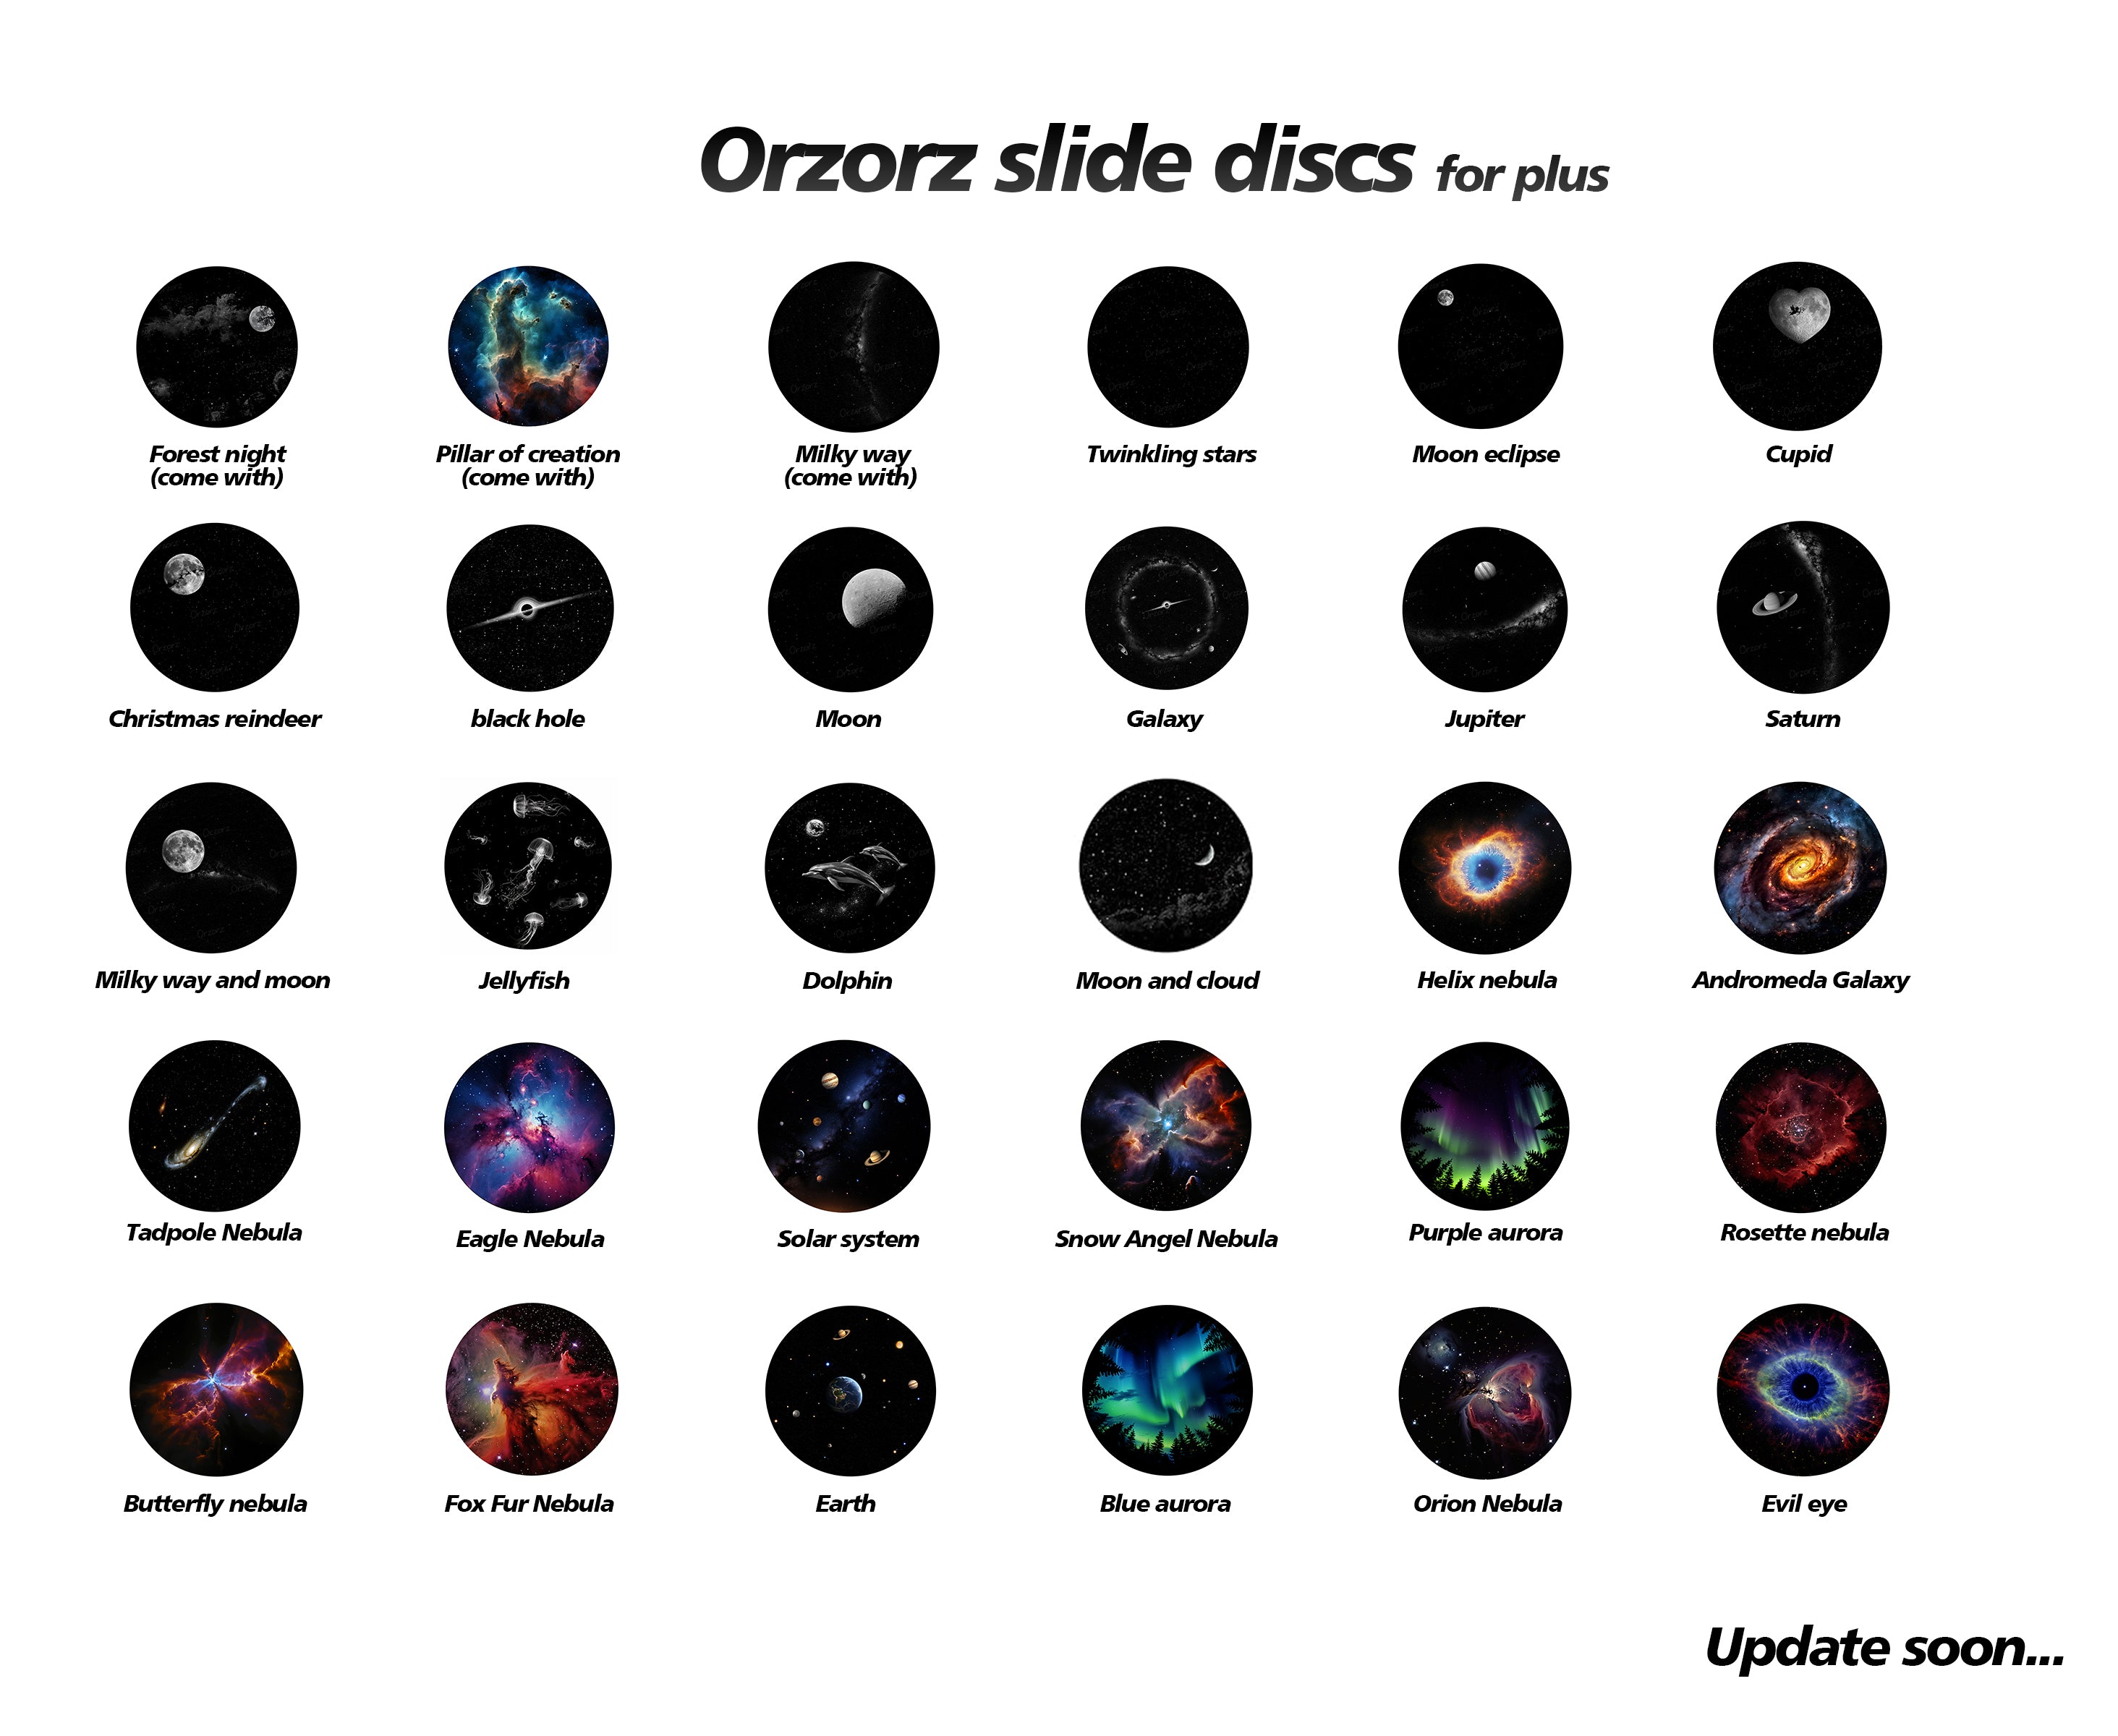 Orzorz slide discs for plus